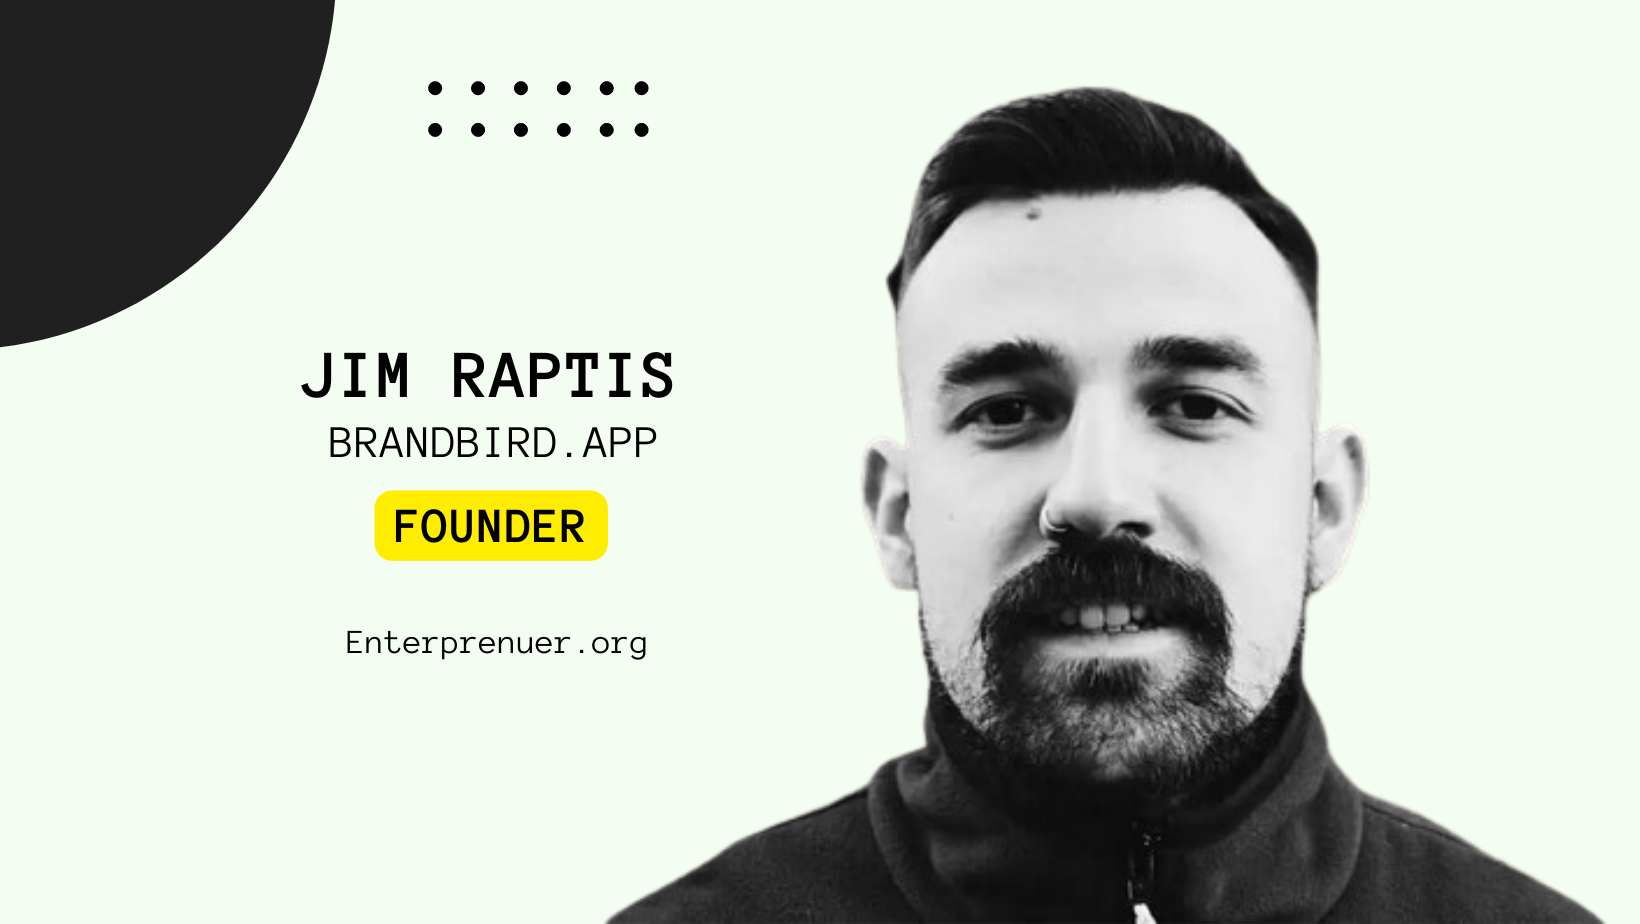 Jim Raptis Founder of BrandBird.app